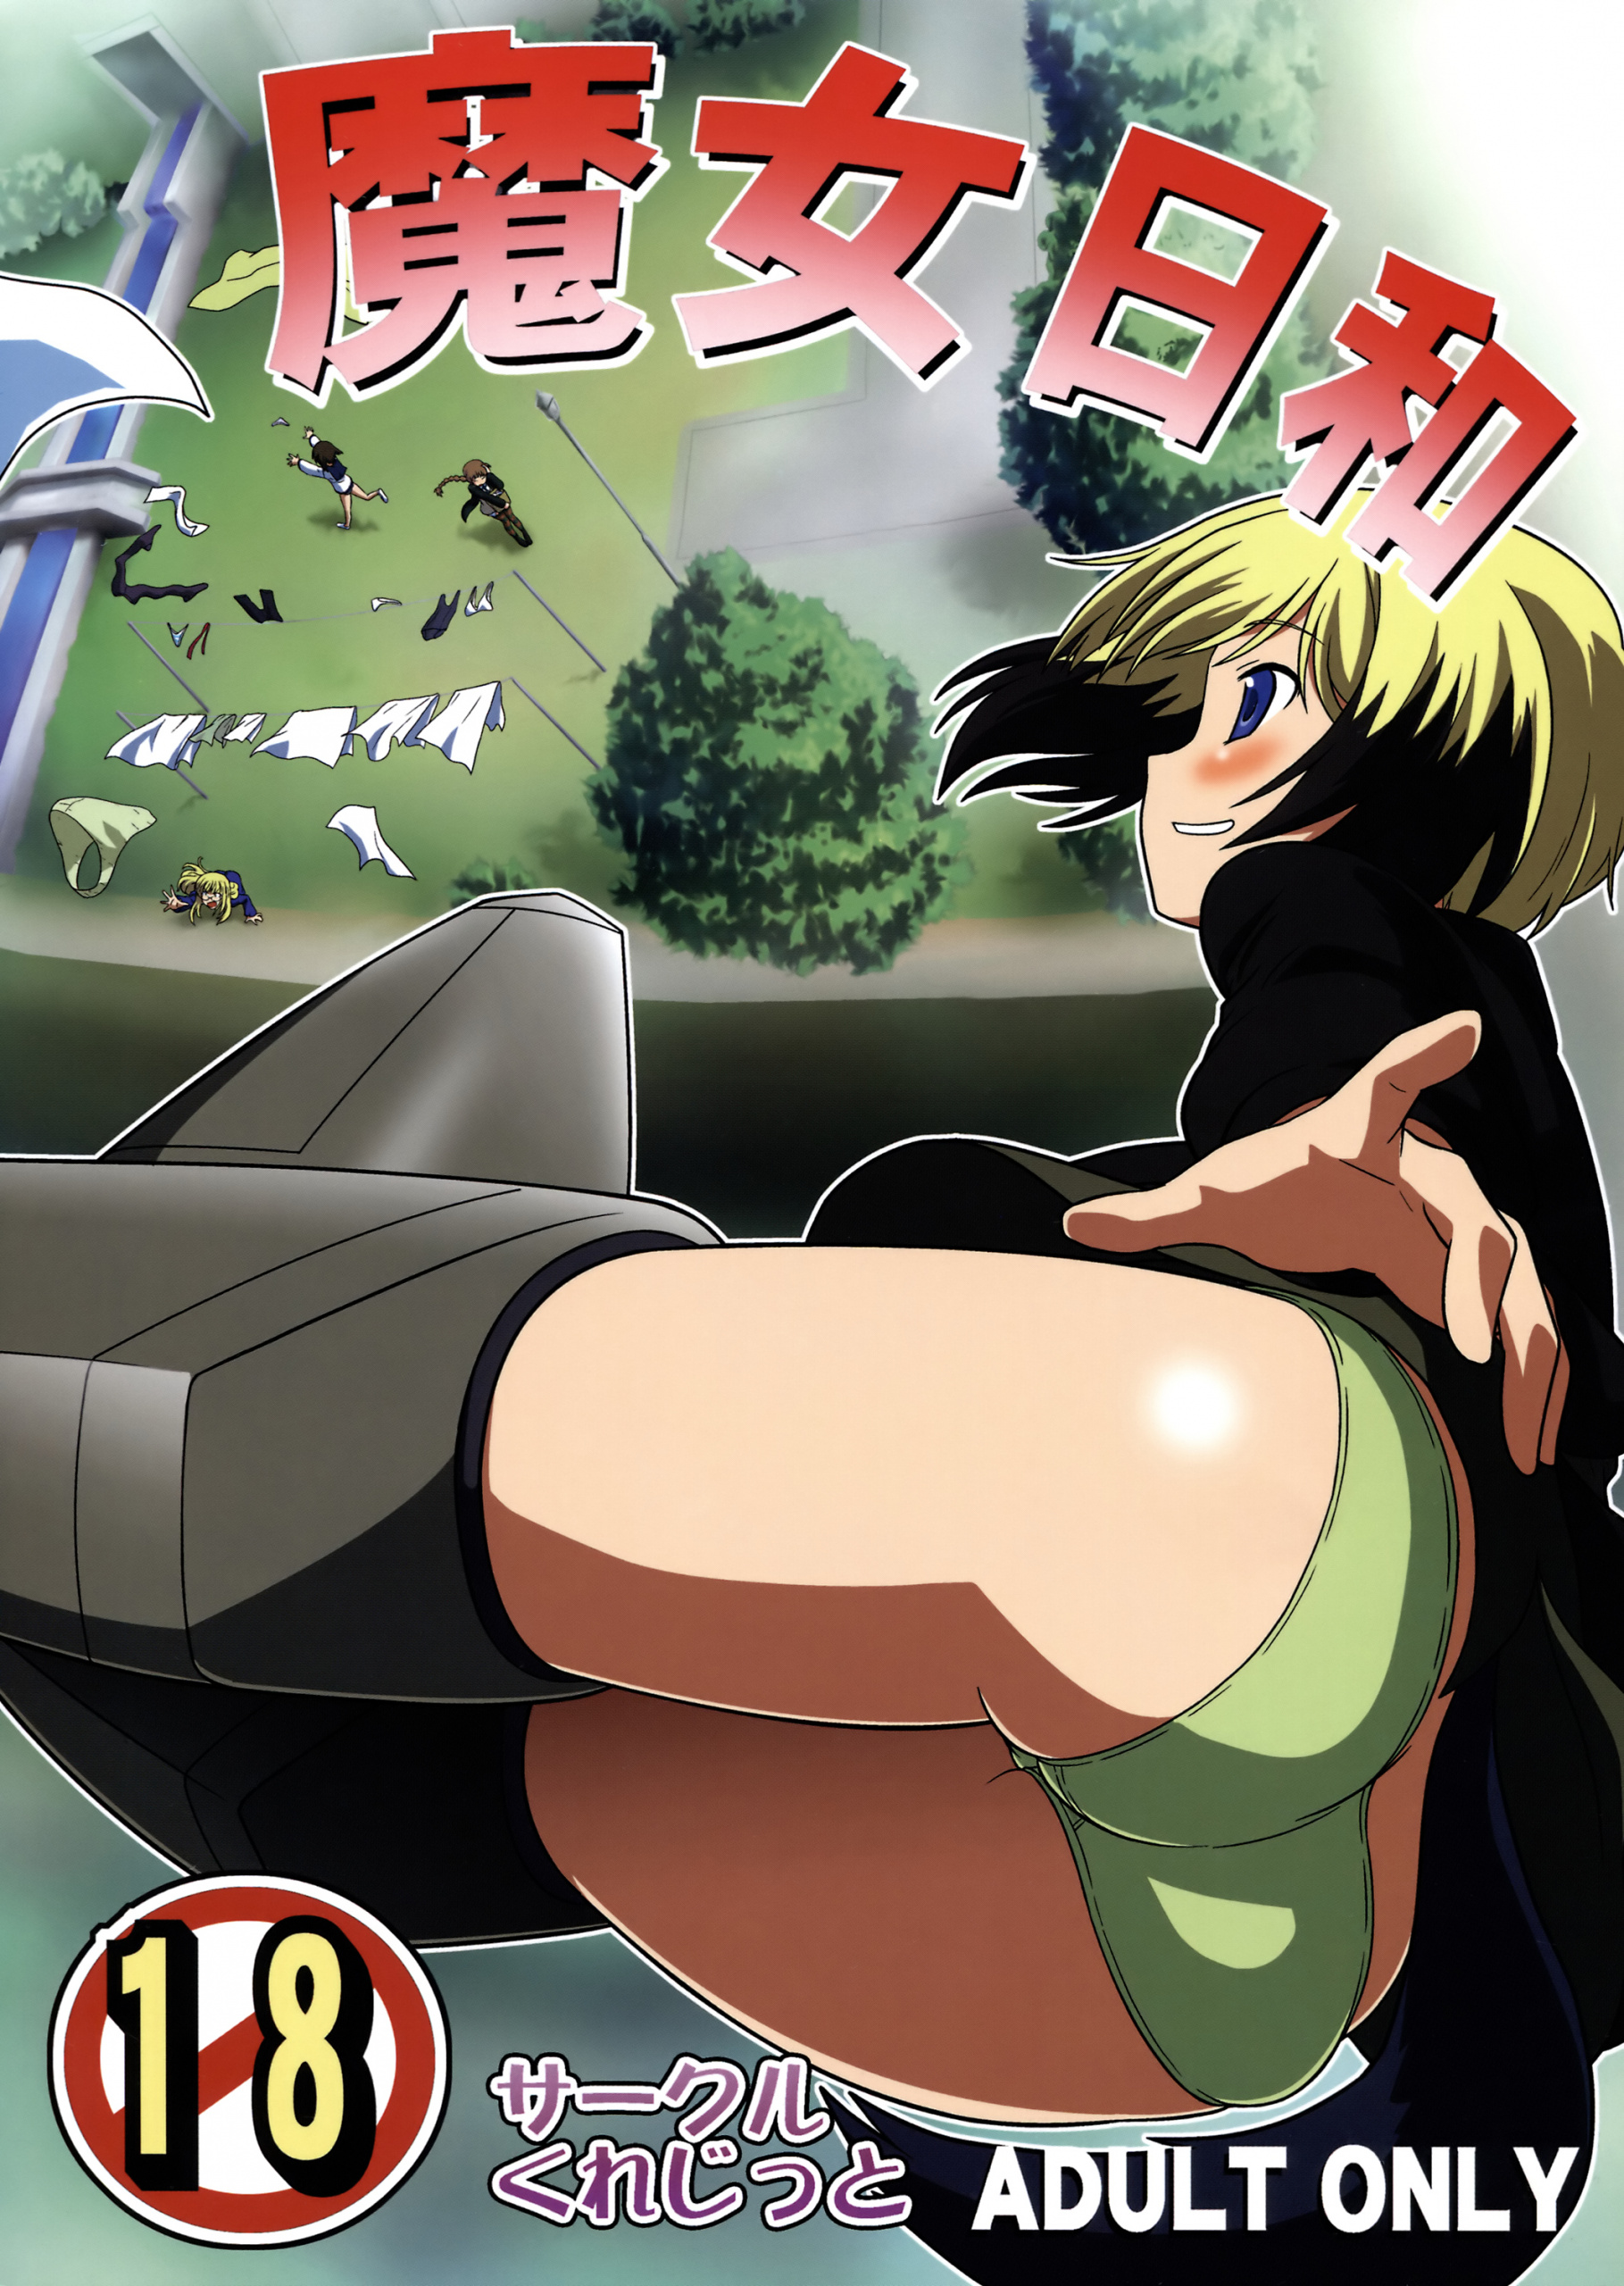 Squirt Lesbian Hentai - Yuri: Girls daily games - Multporn Comics & Hentai manga